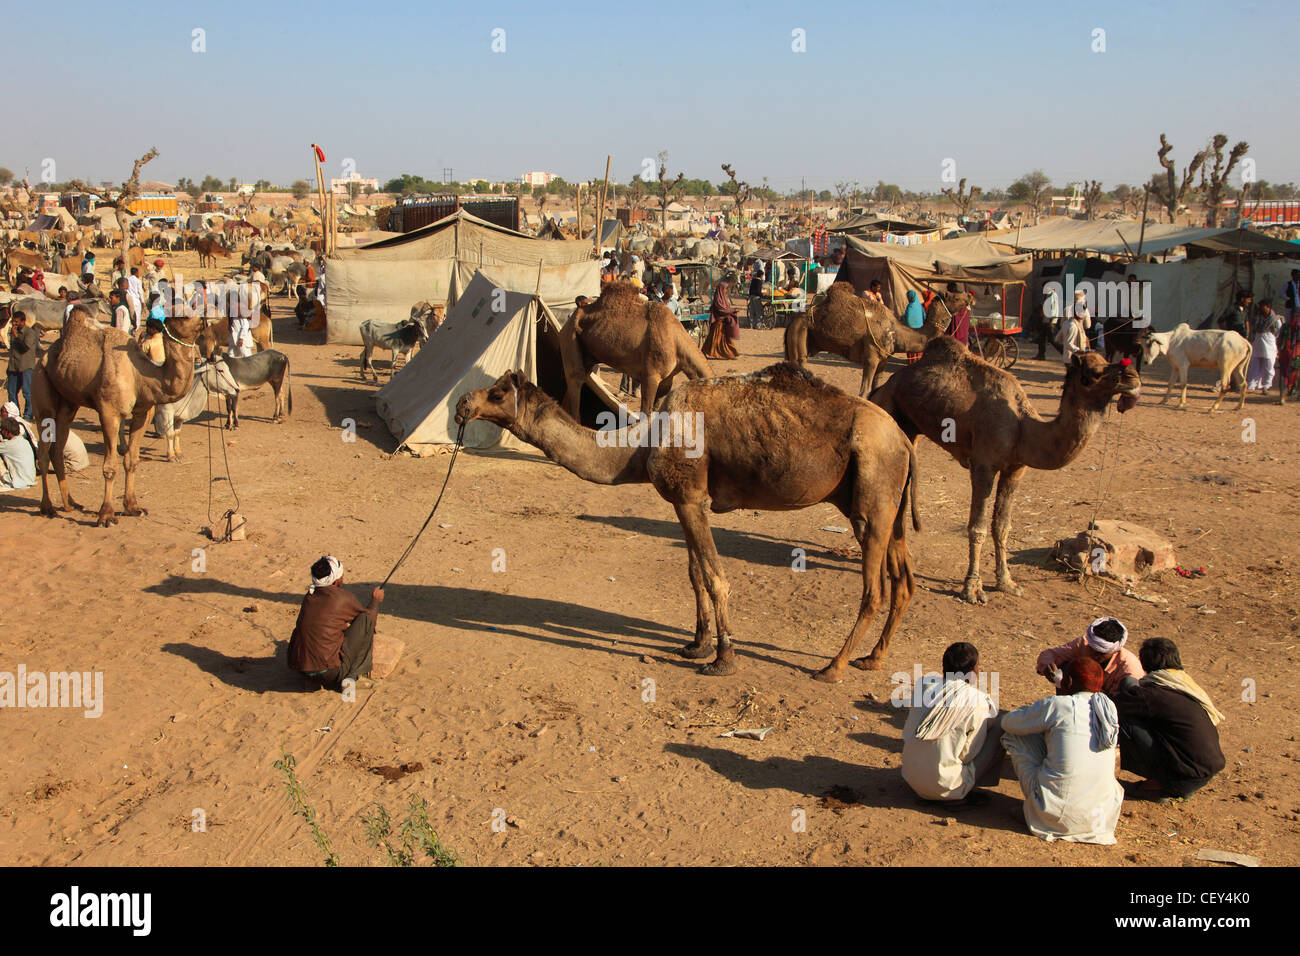 India, Rajasthan, Nagaur, Fair, general view, camels, people, Stock Photo